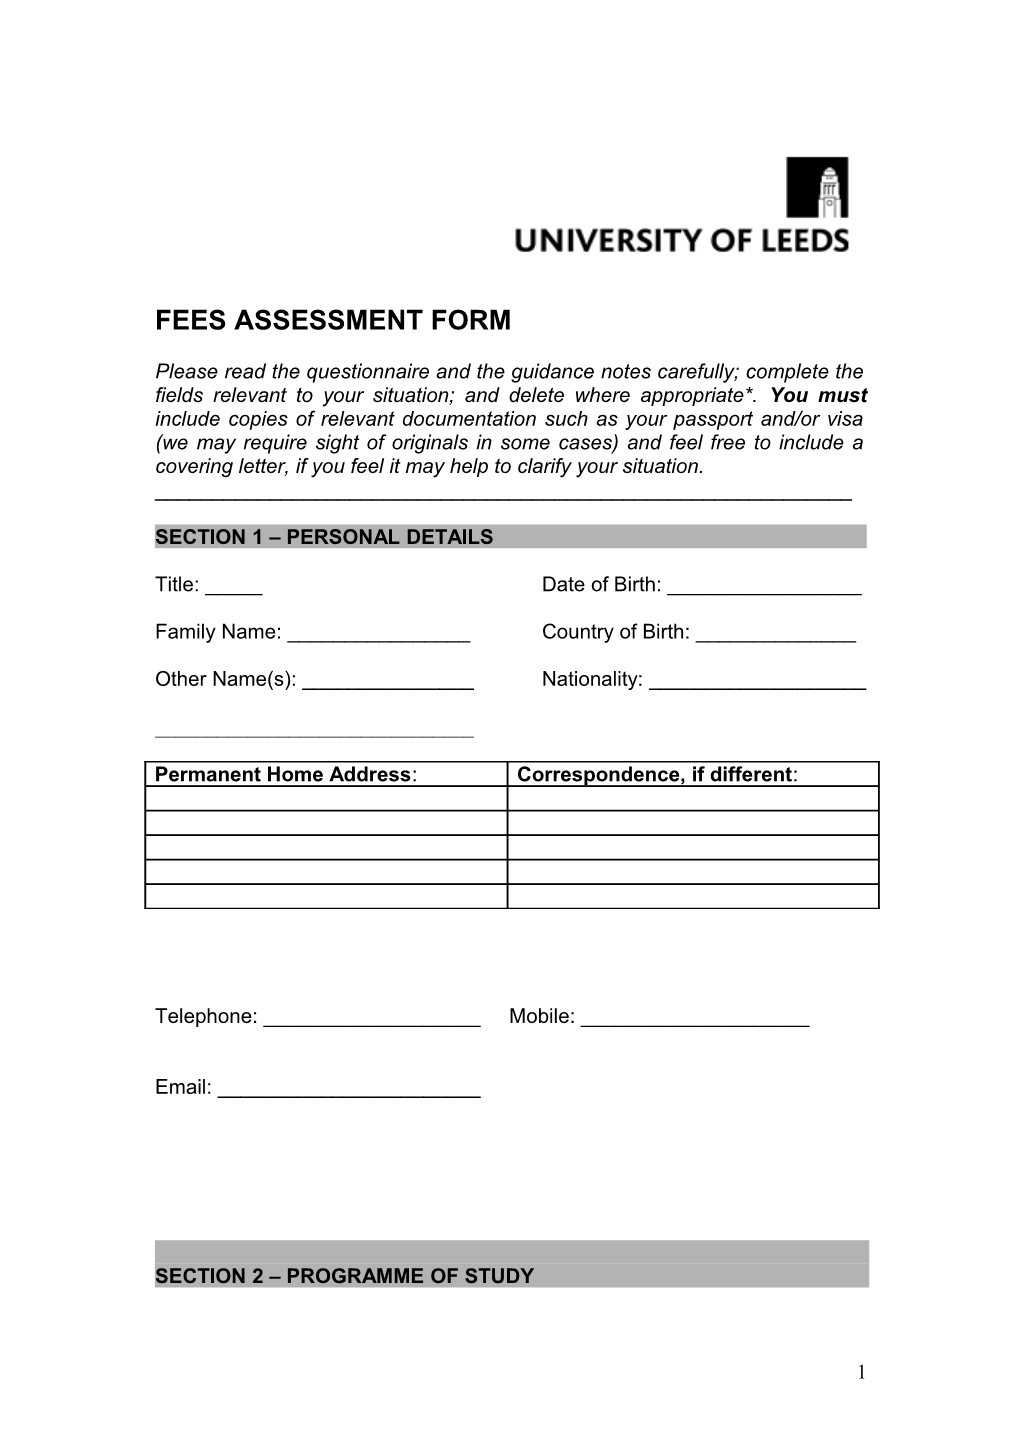 Fees Assessment Form